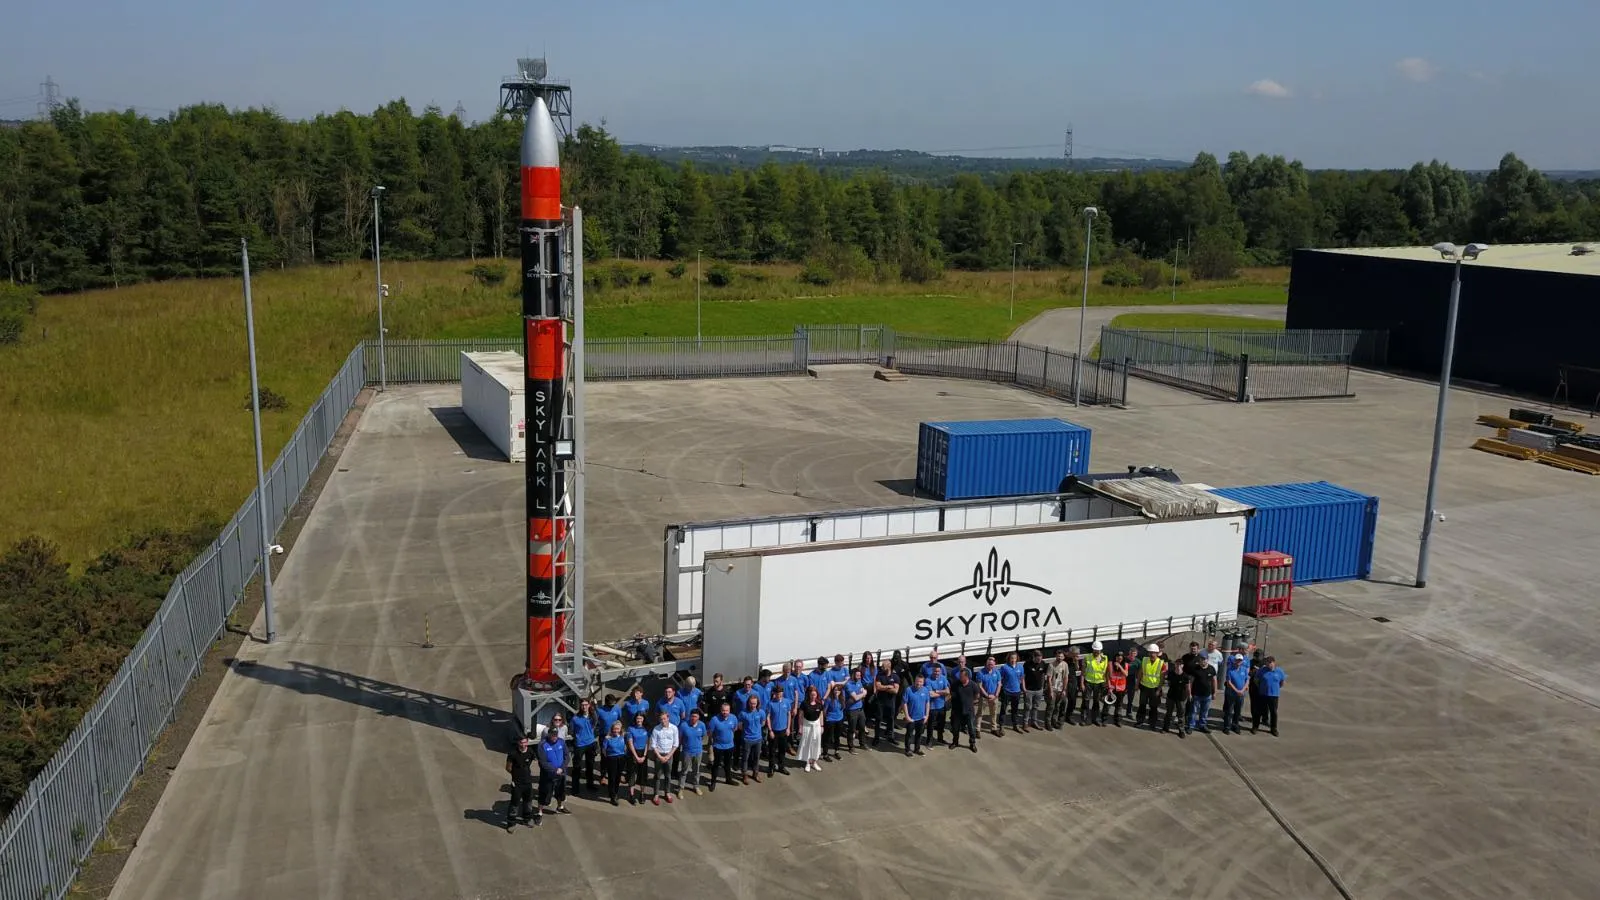 Skyrora team next to its rocket vehicle prototype Skylark L.